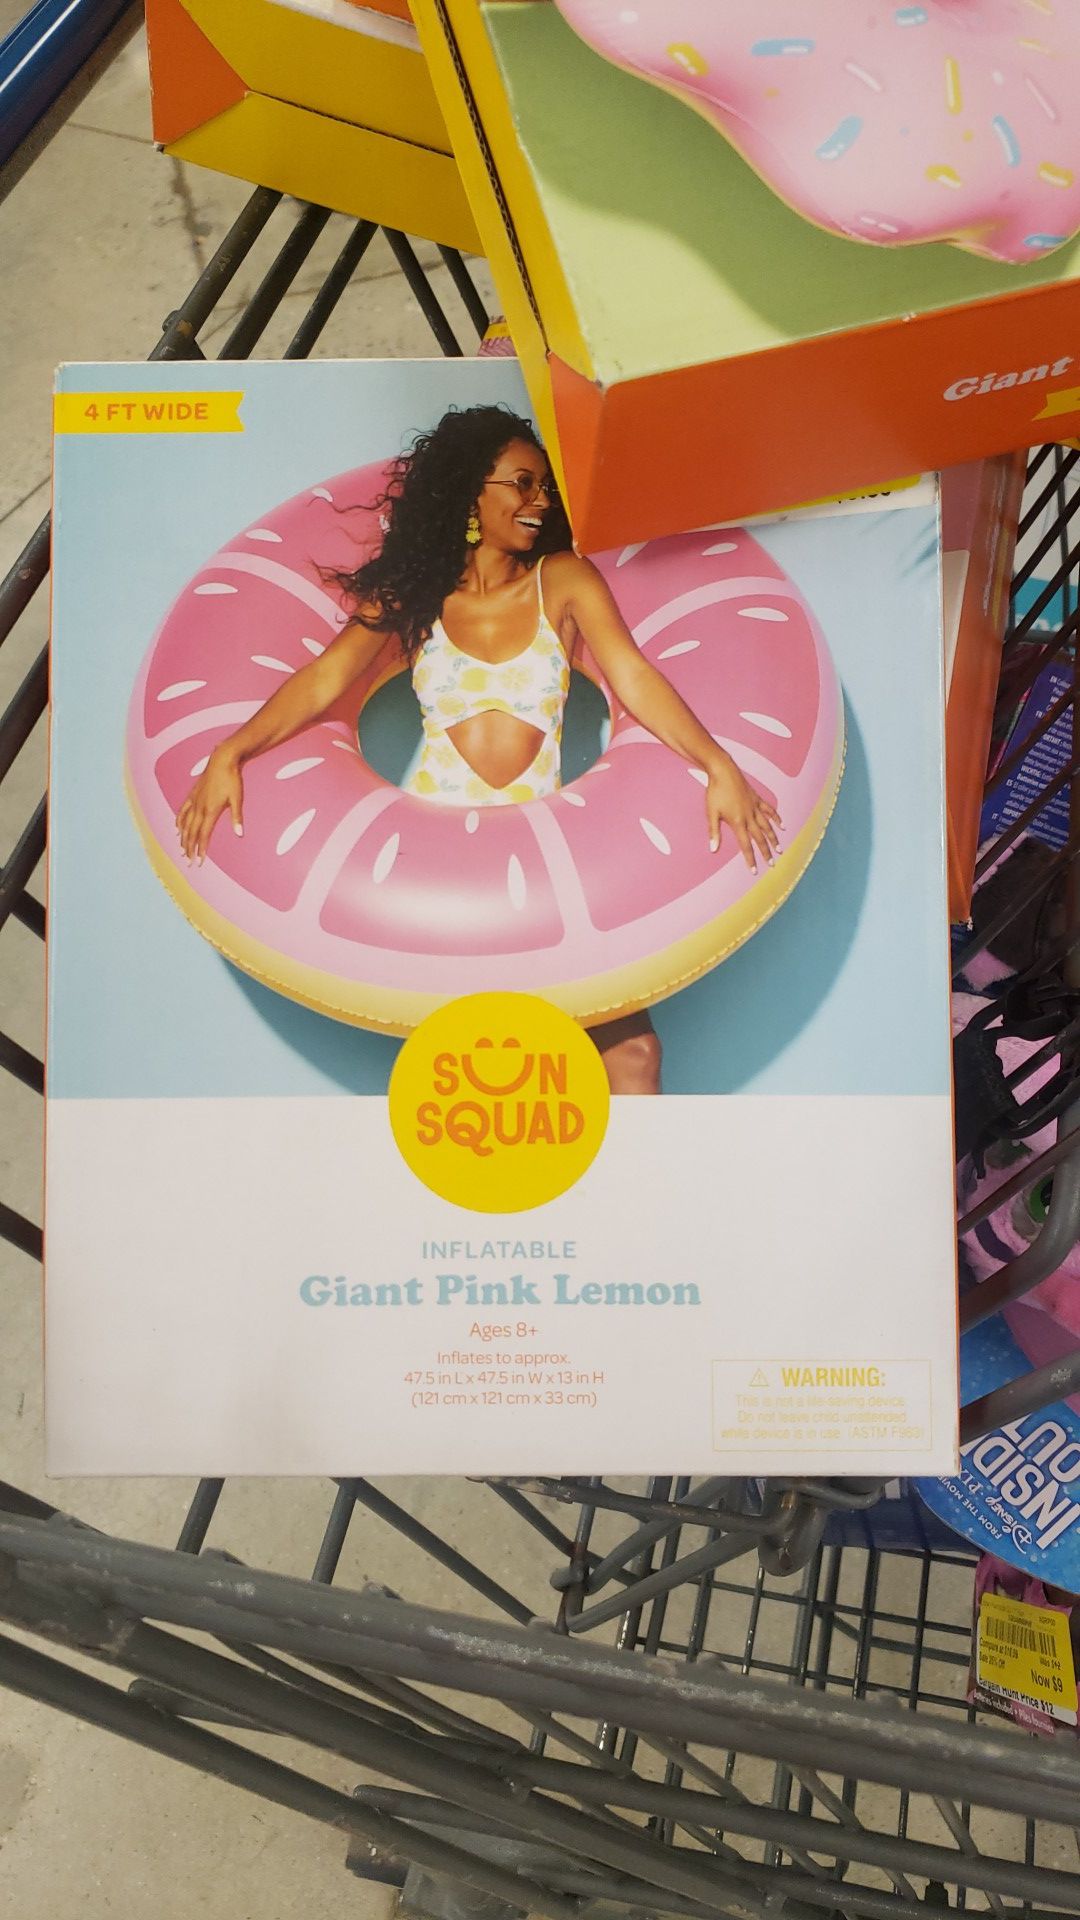 Giant pink lemon float SUN SQUAD